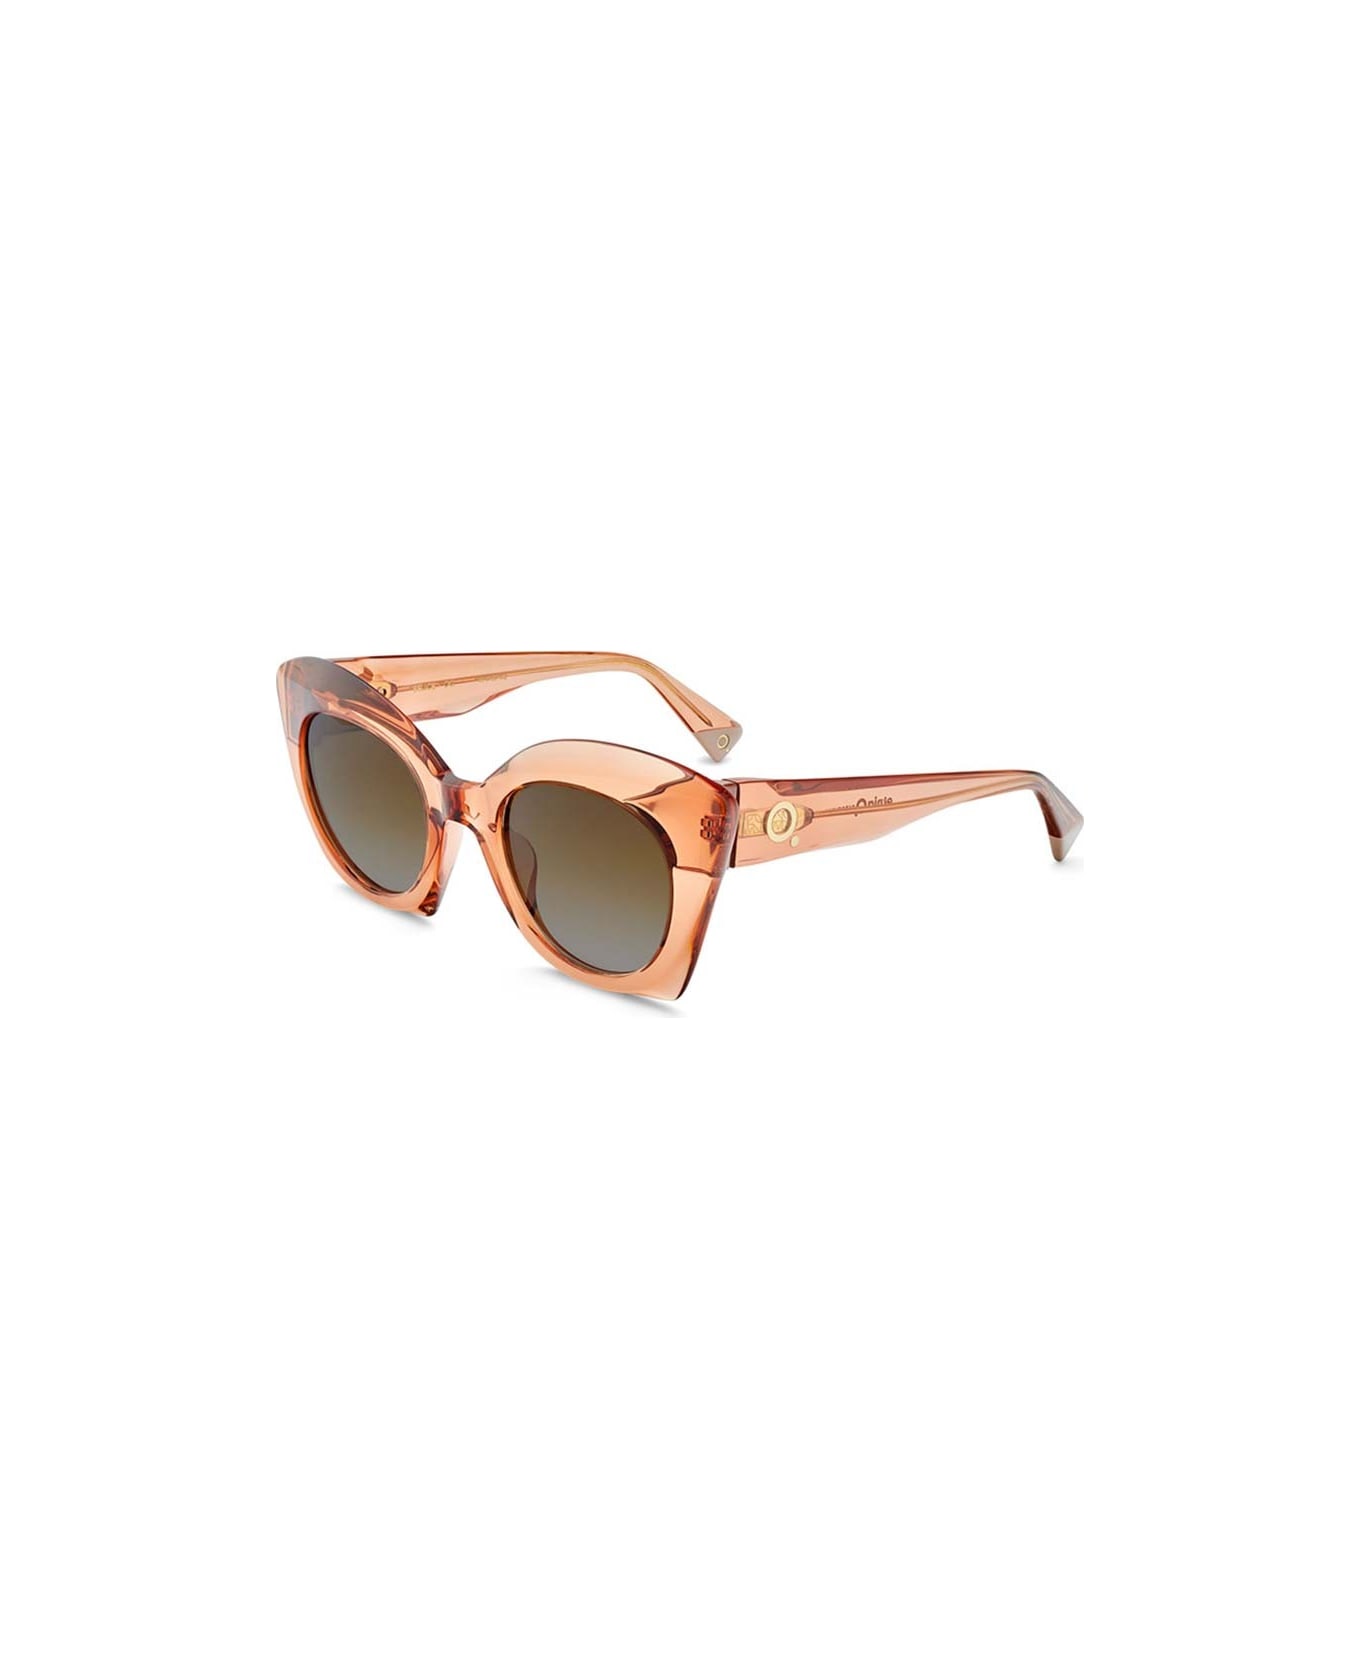 Etnia Barcelona Sunglasses - Arancione/Marrone